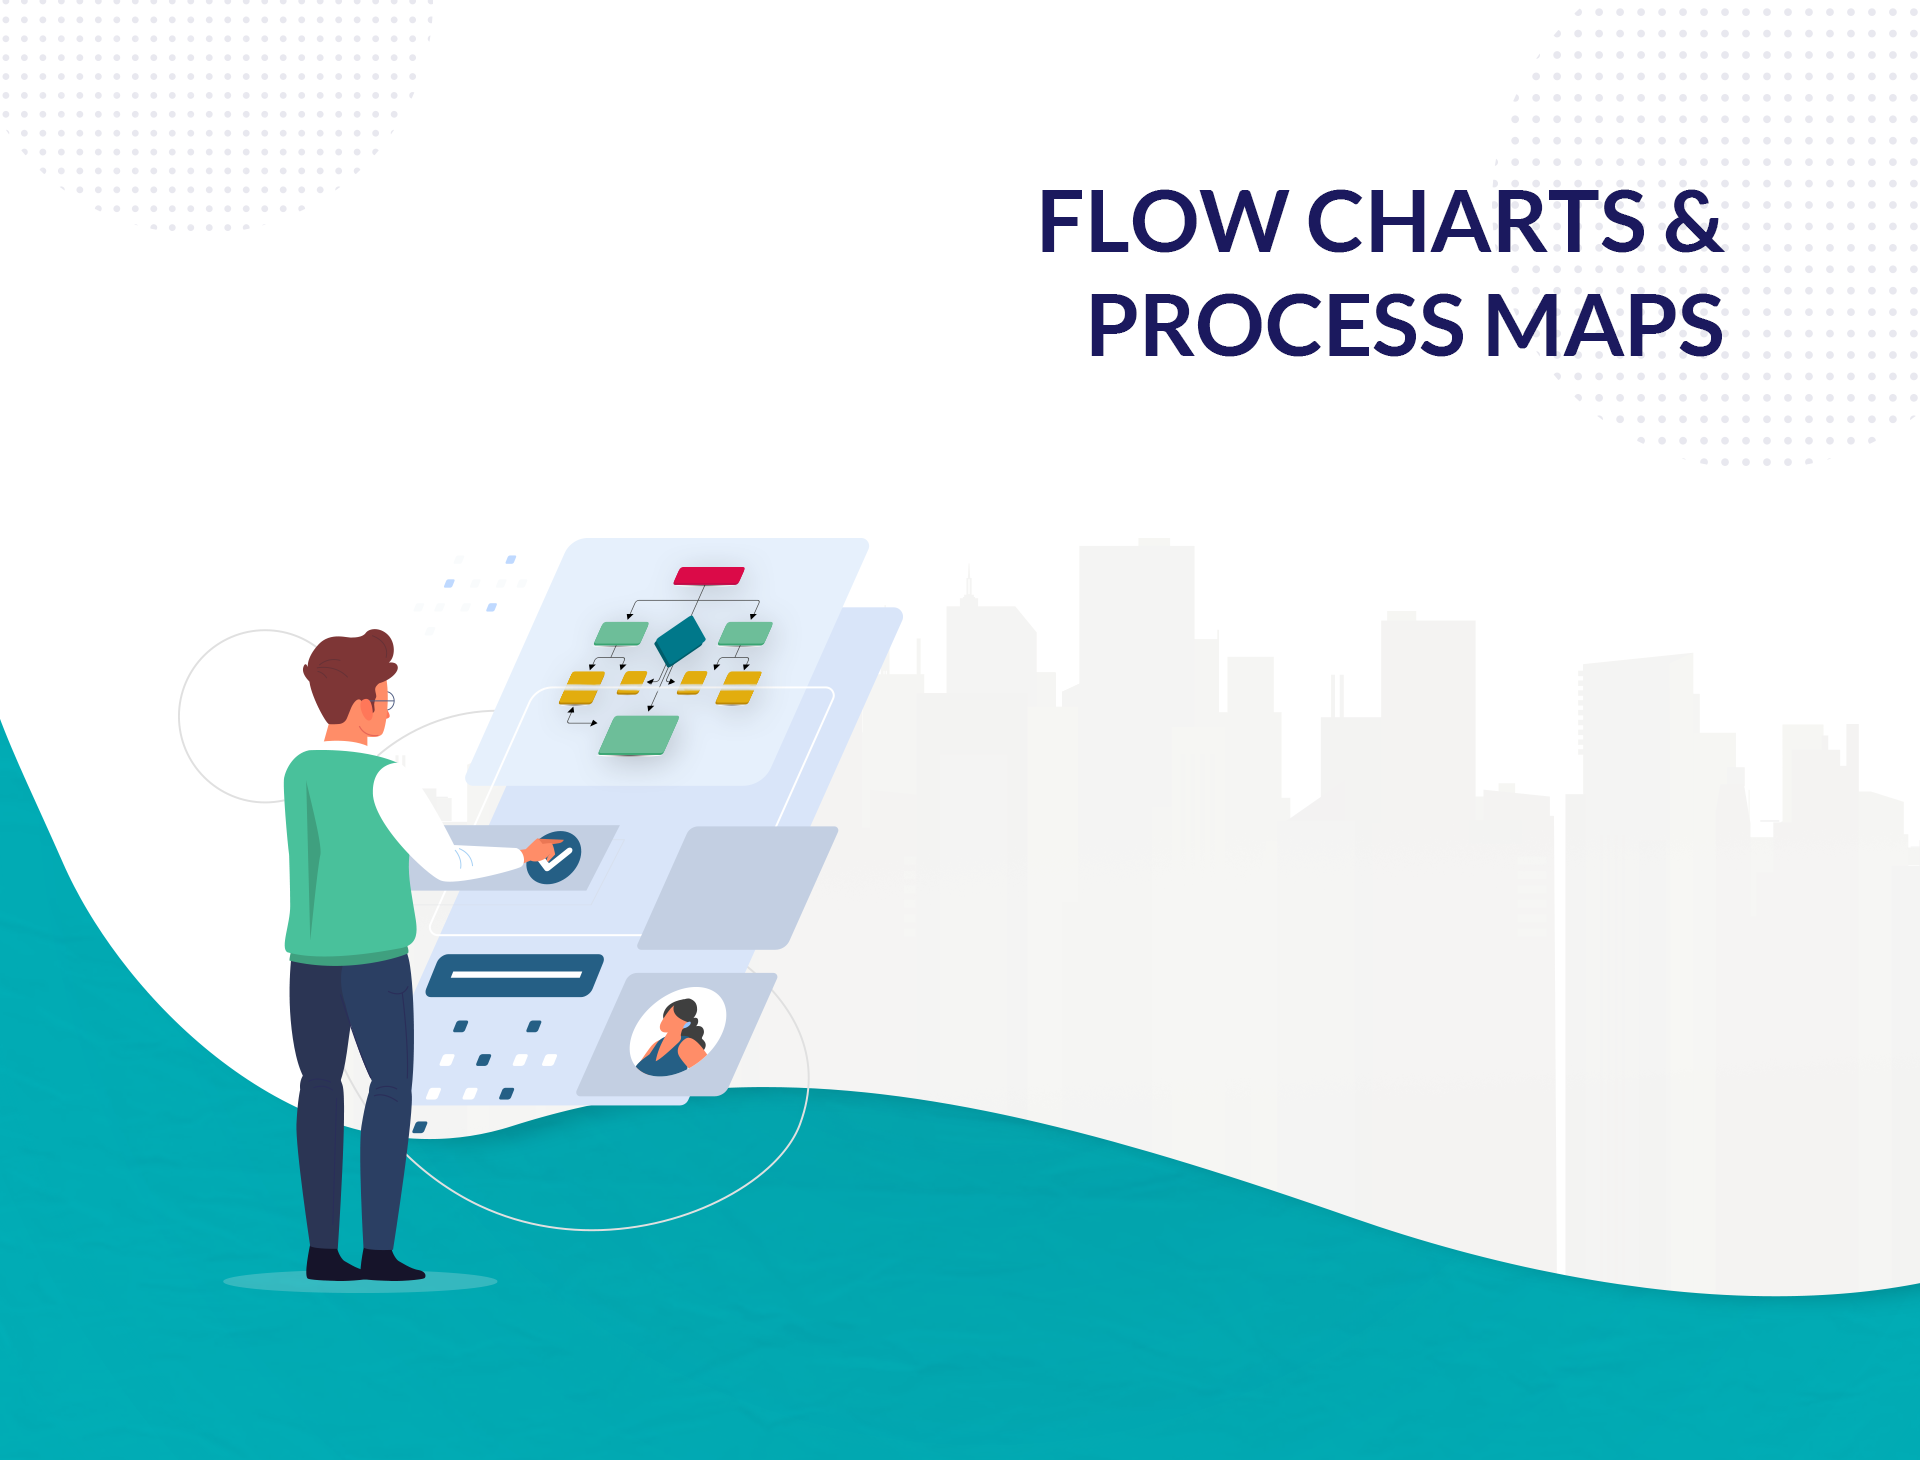 Flow Charts & Process Maps